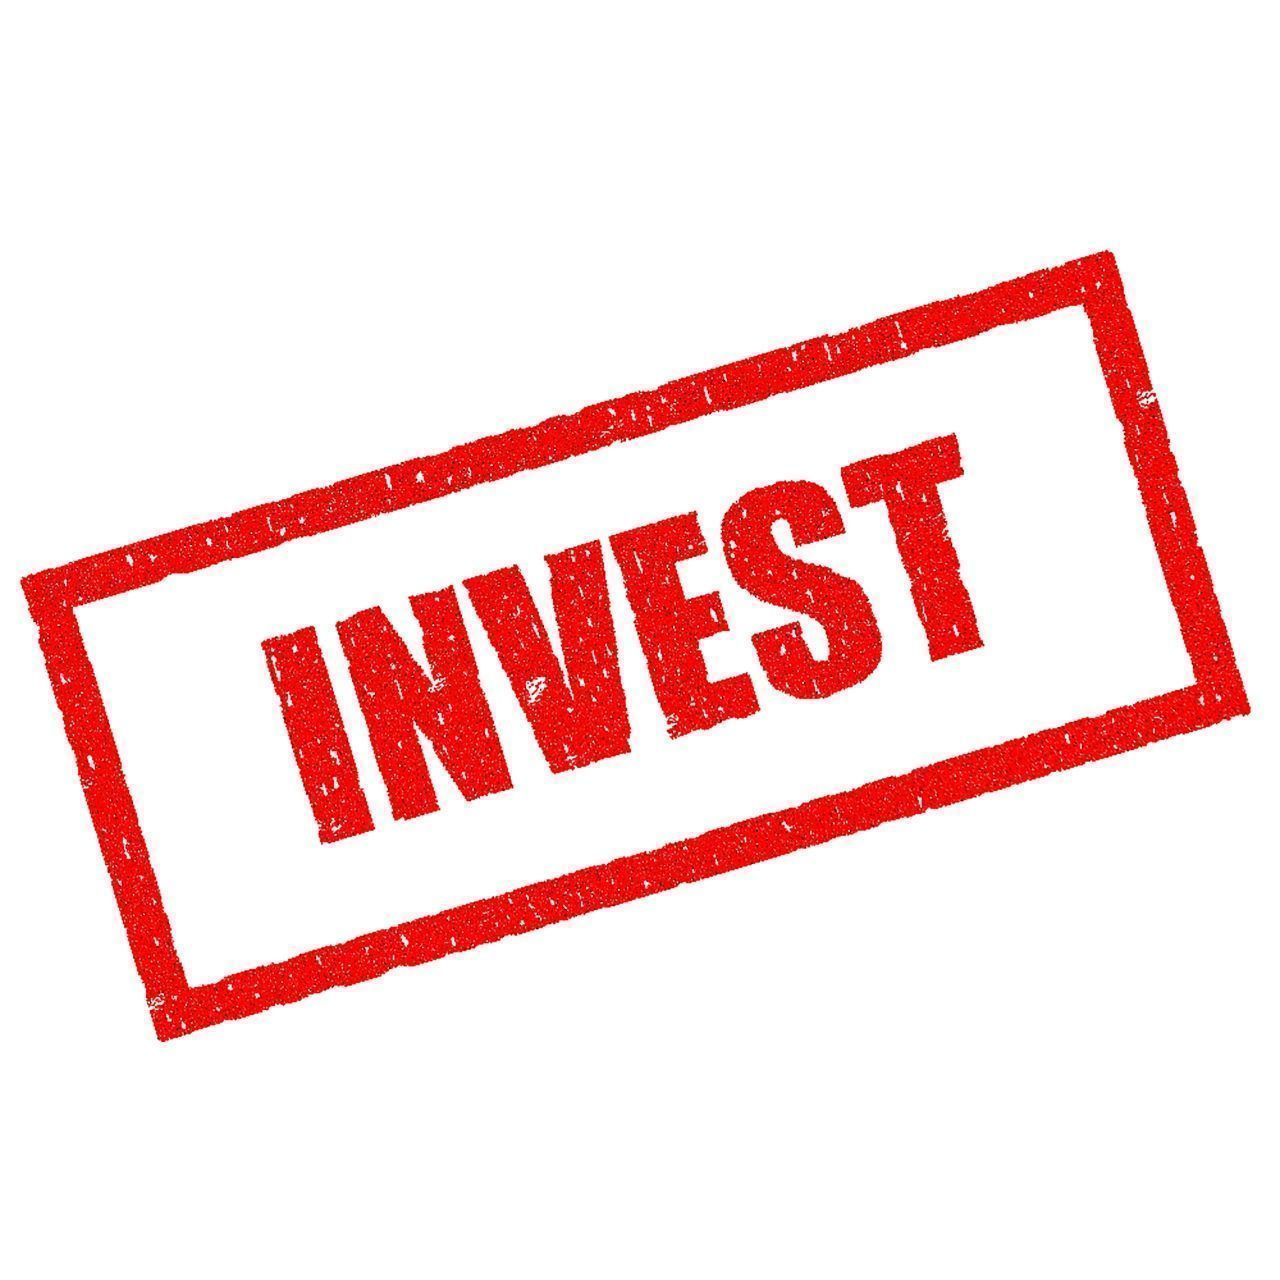 investment news